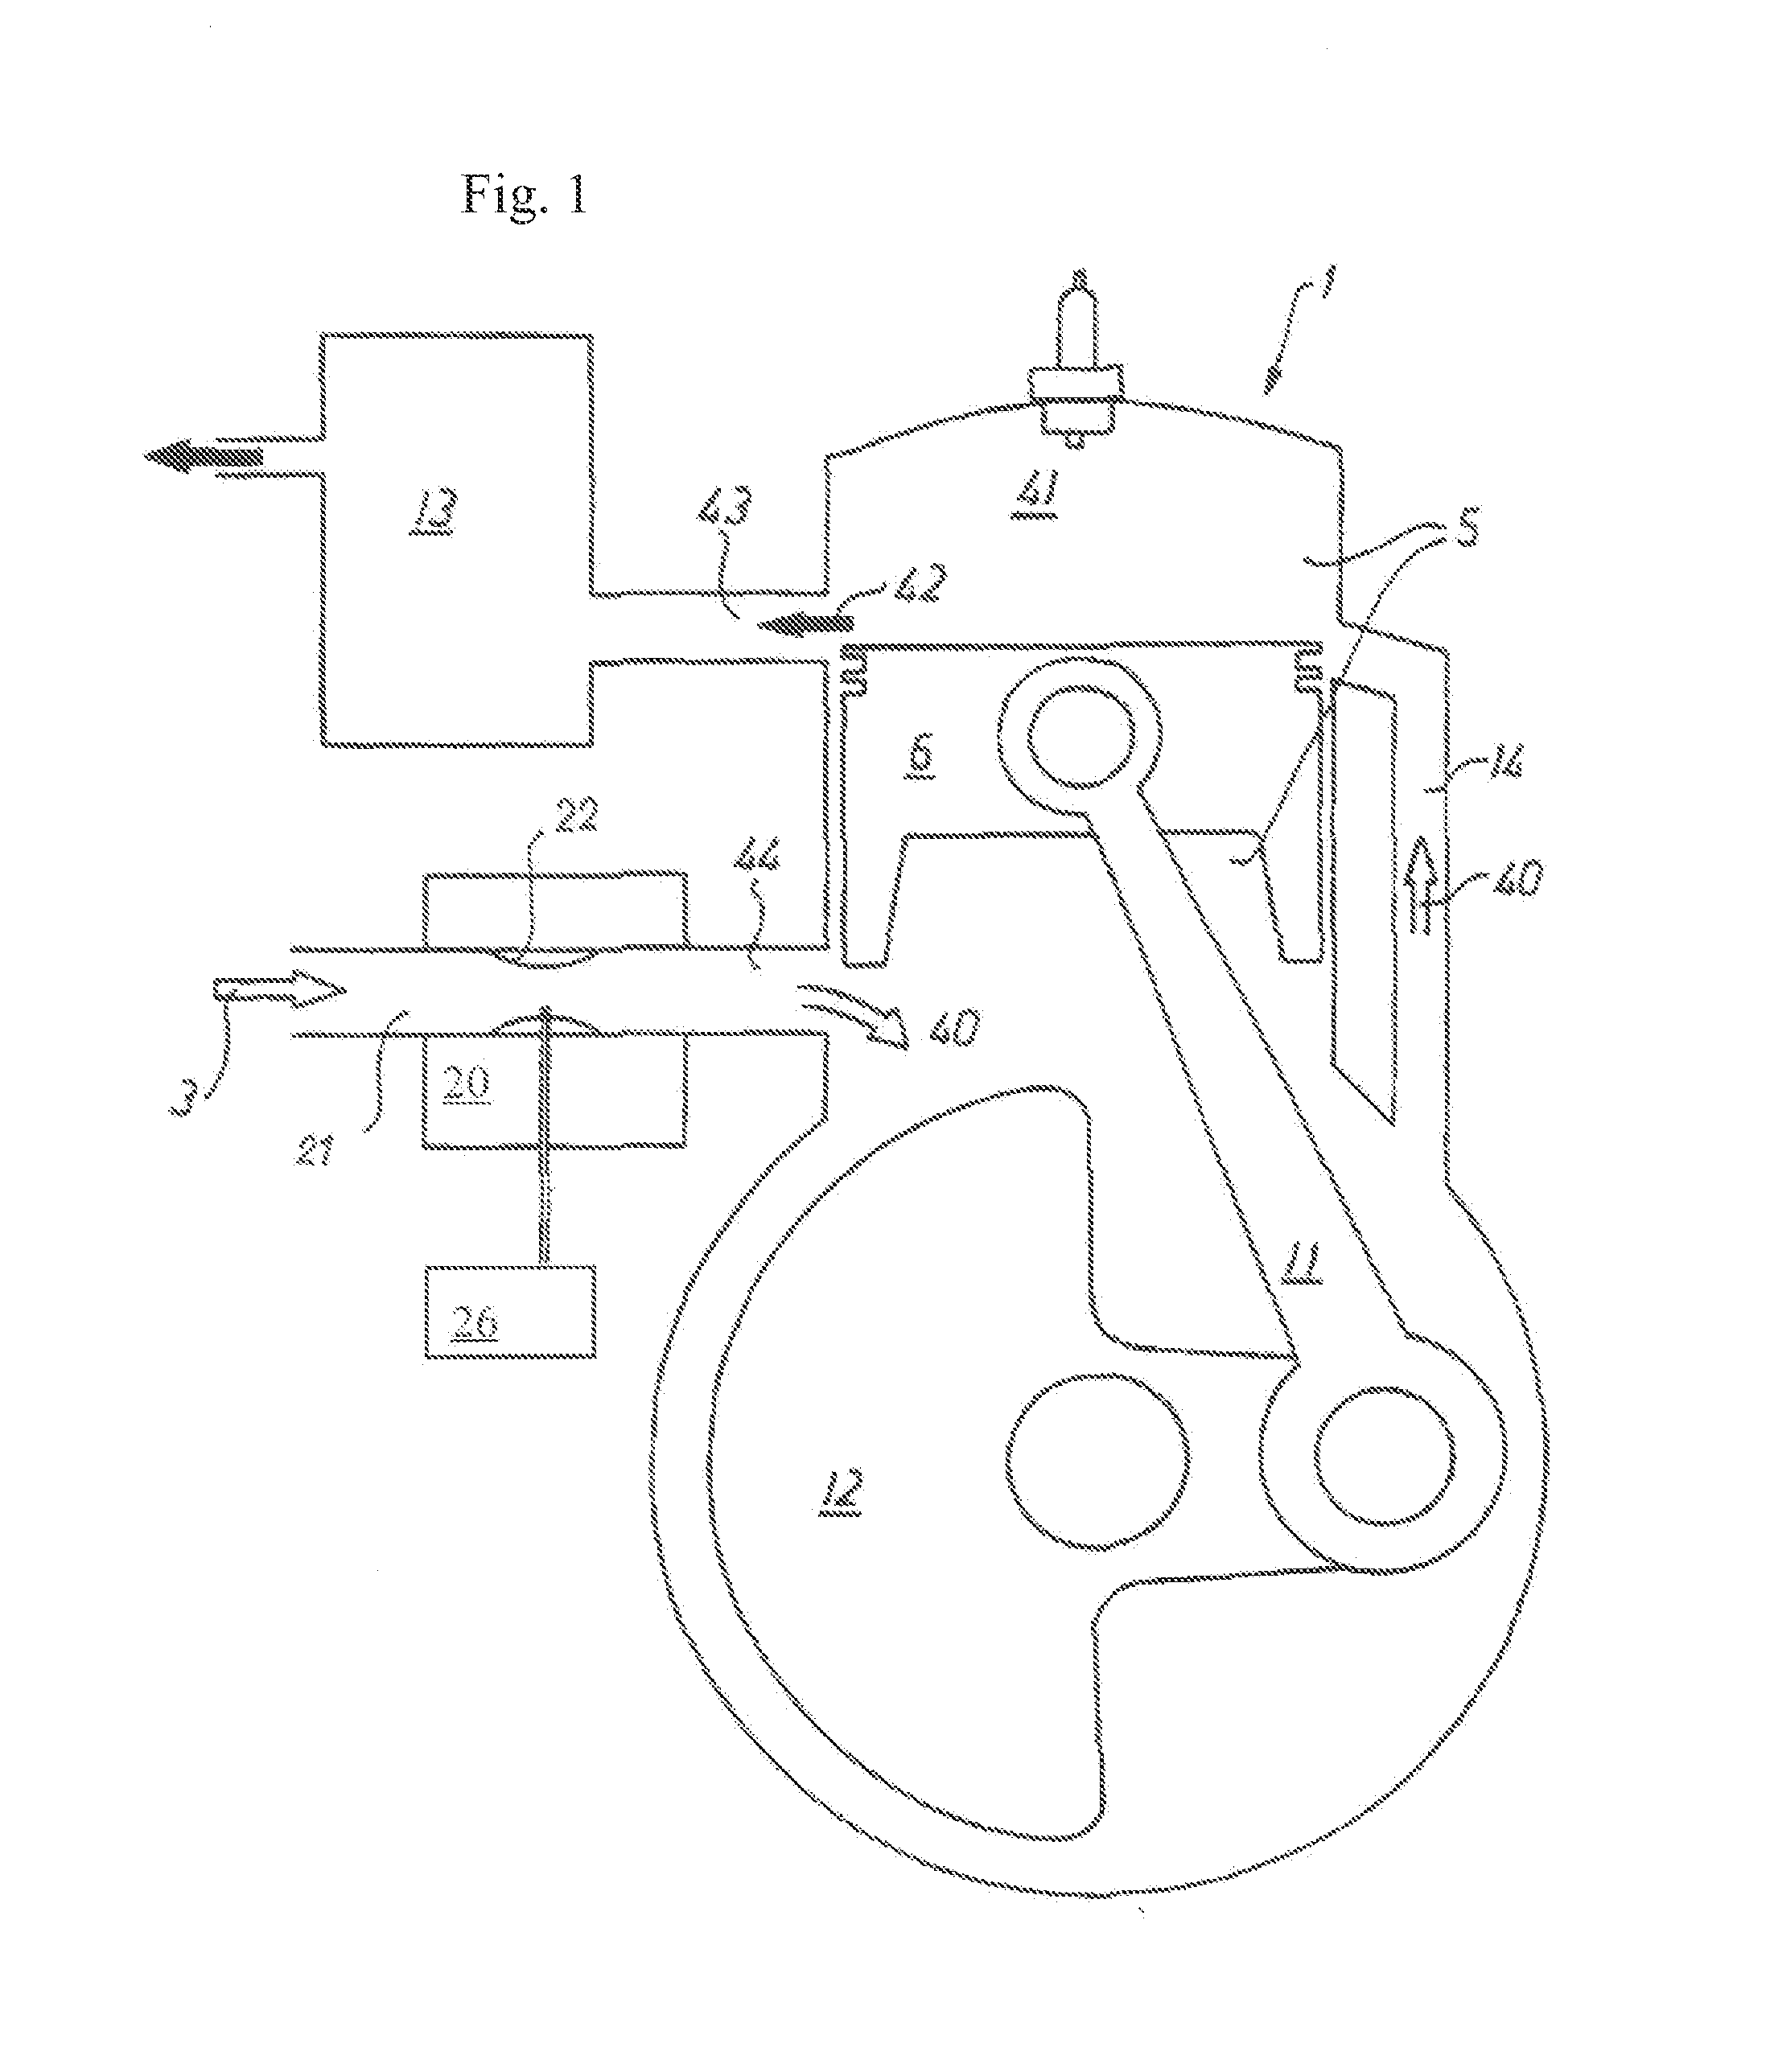 Carburetor system for a carburetor engine